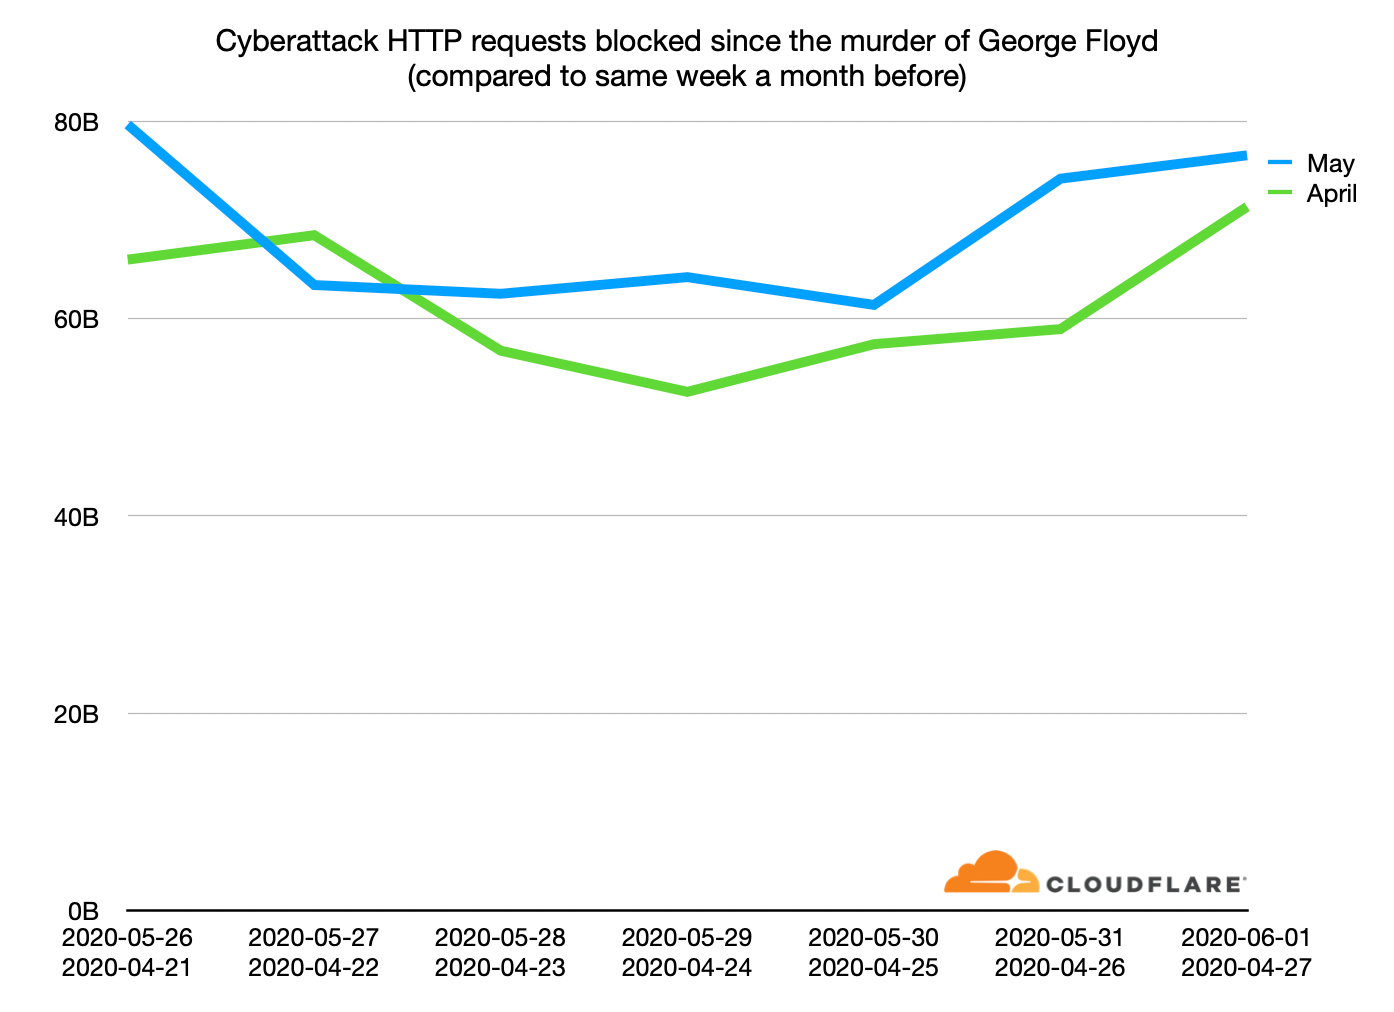 Cyberattacks since the murder of George Floyd